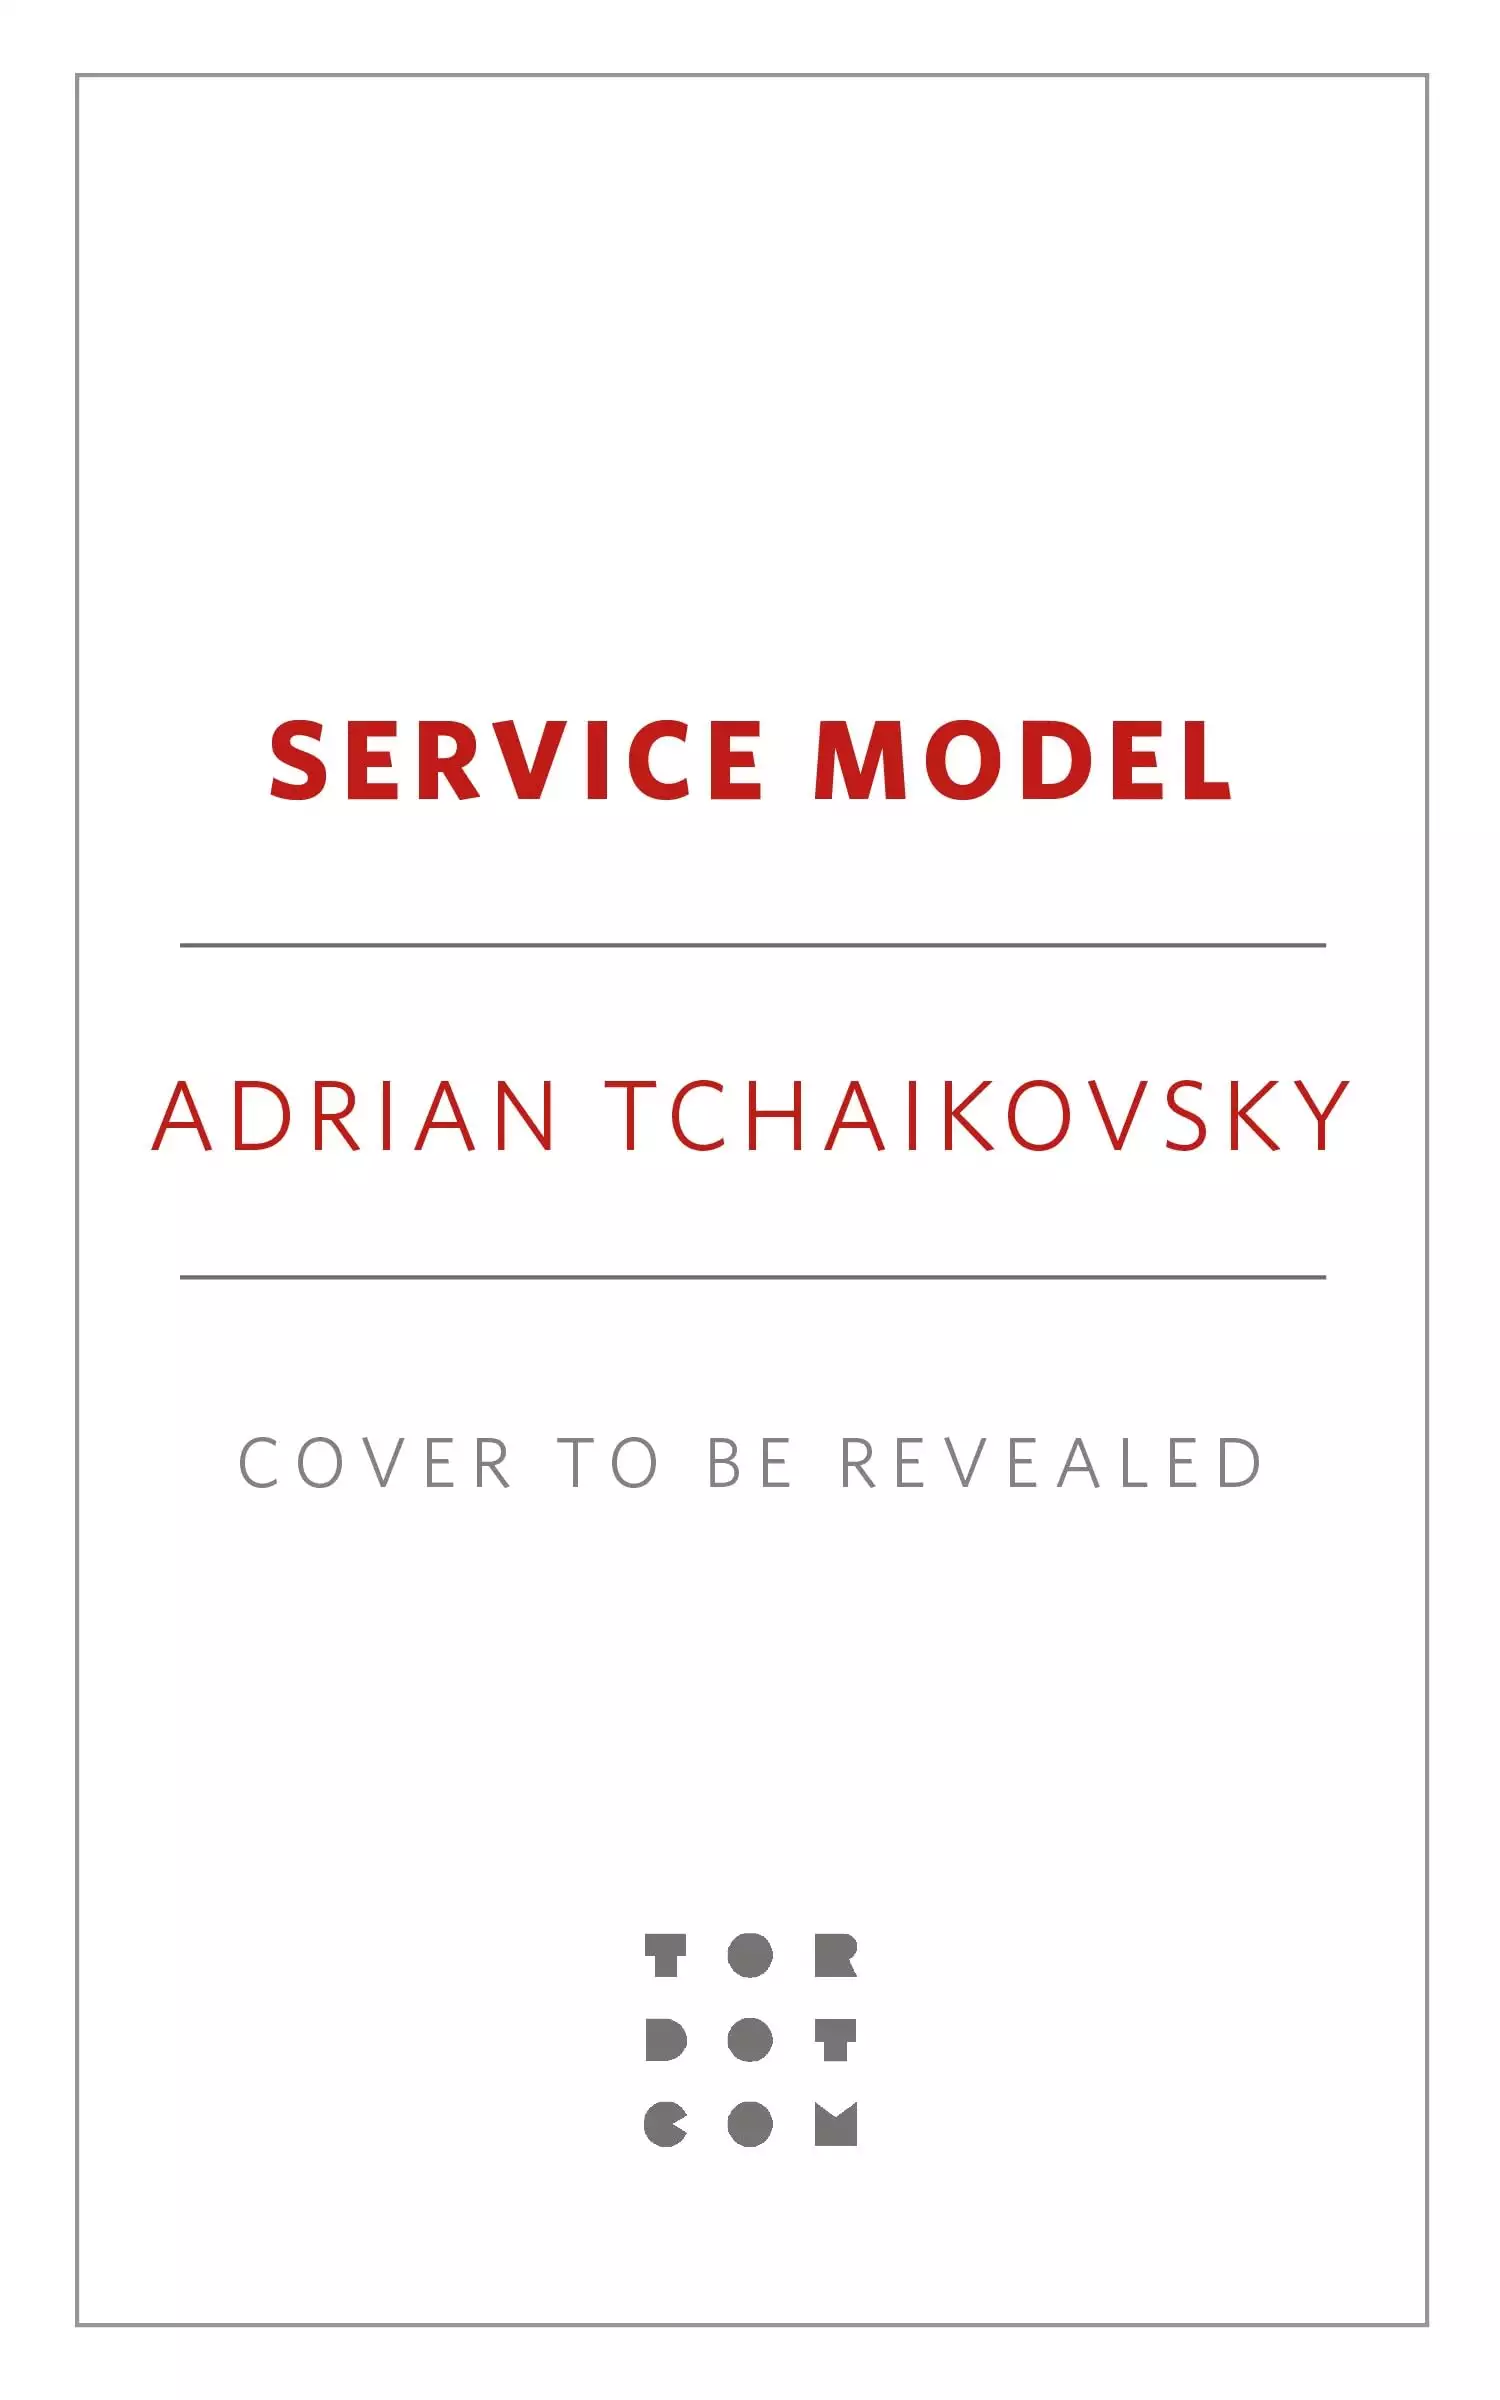 Service Model